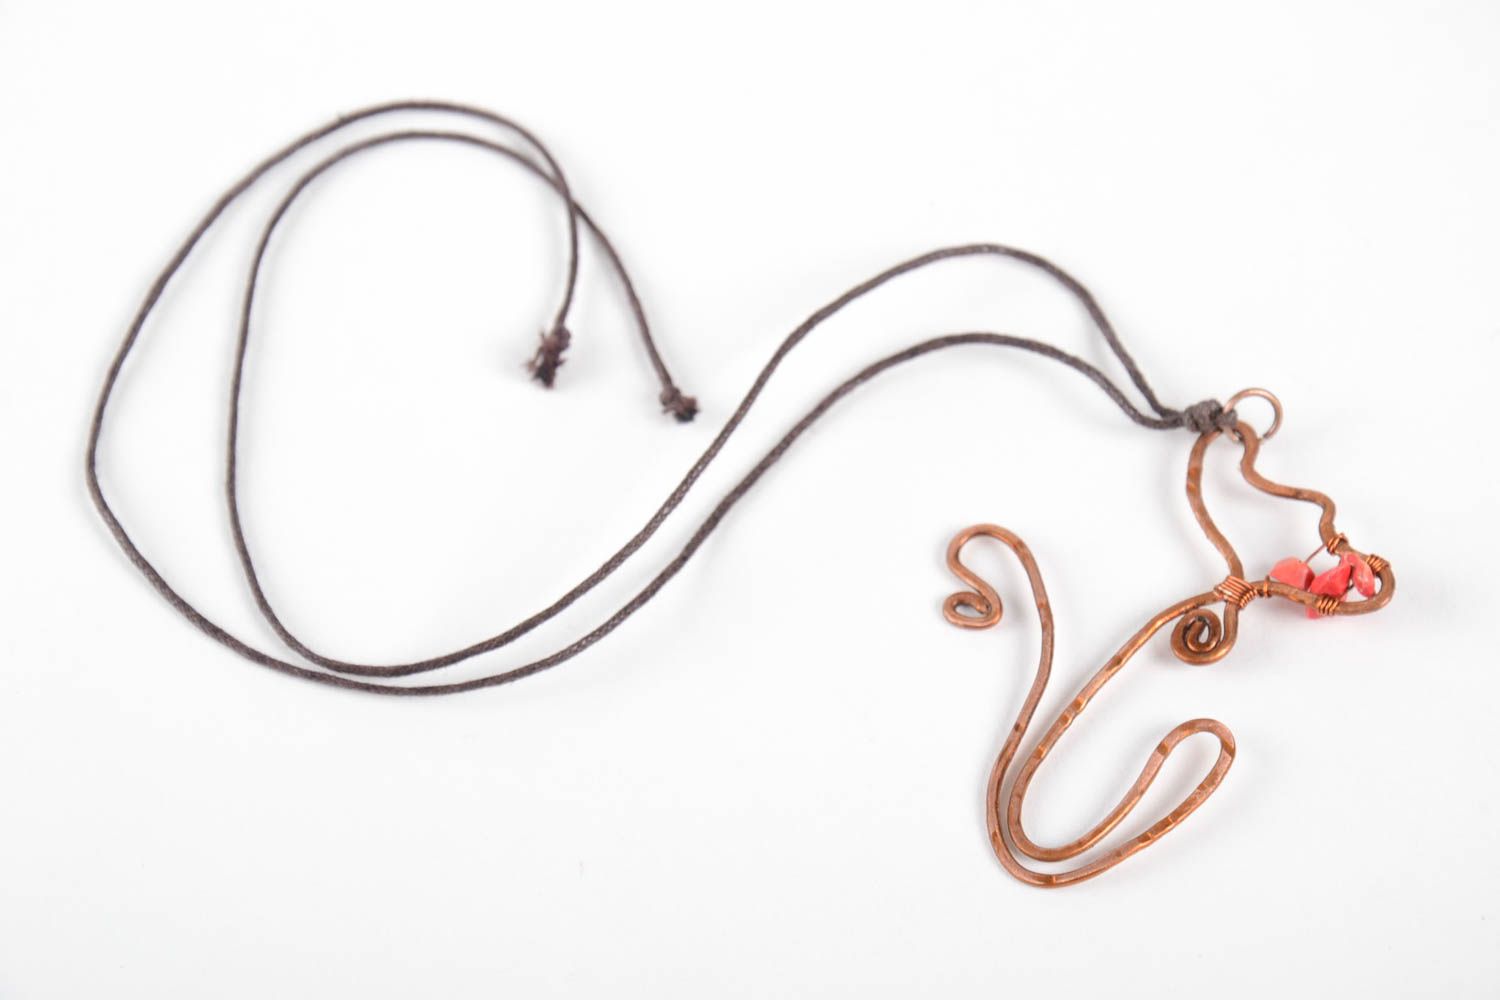 Handmade copper necklace designer pendant handmade jewelry with natural stones photo 5